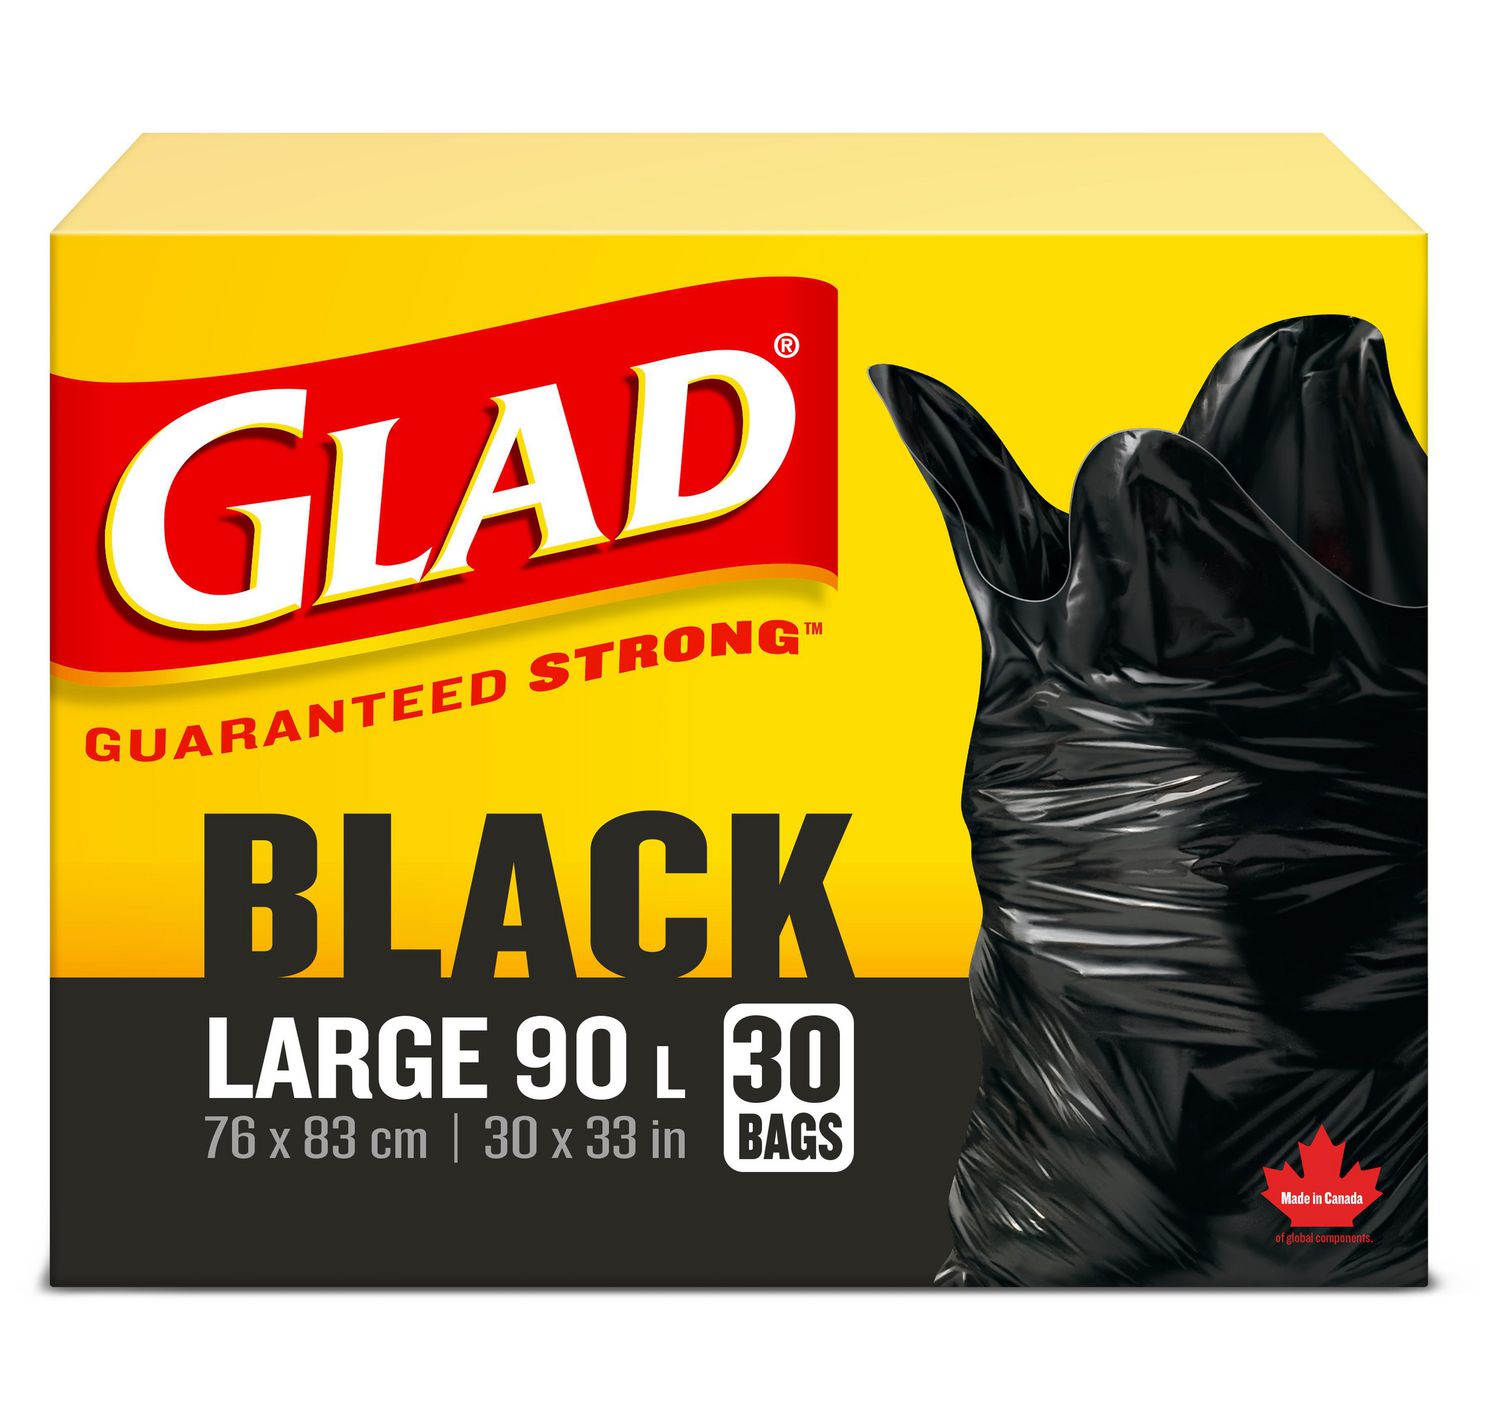 Glad Black Garbage Bags - Large 90 